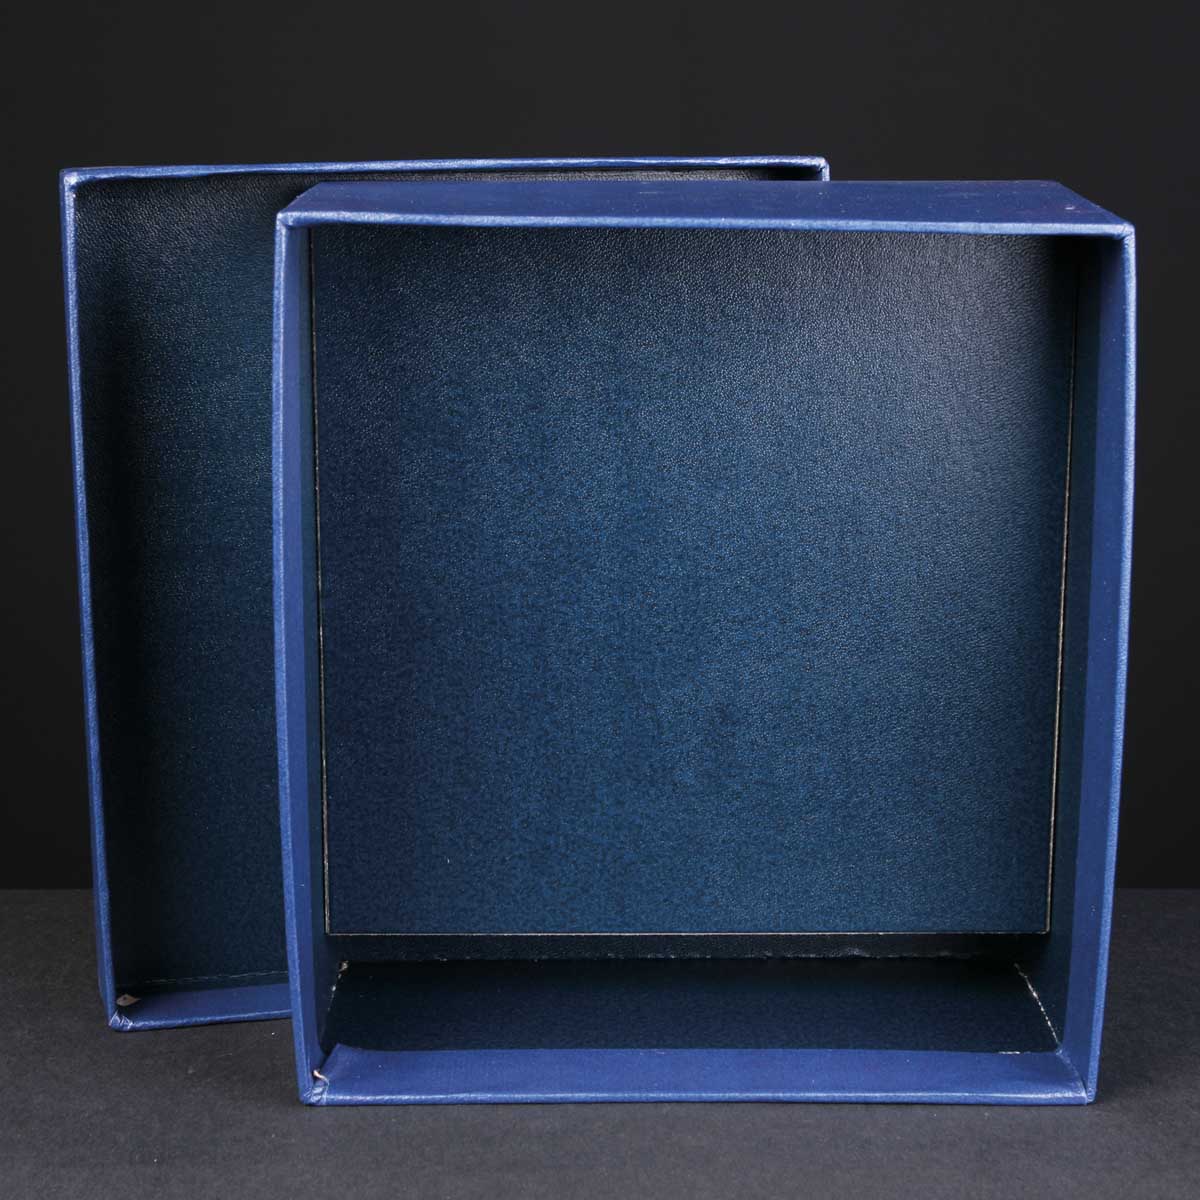 Award Box Portrait Platform 7.25x8x3.5 inches, Single, White Sleeve